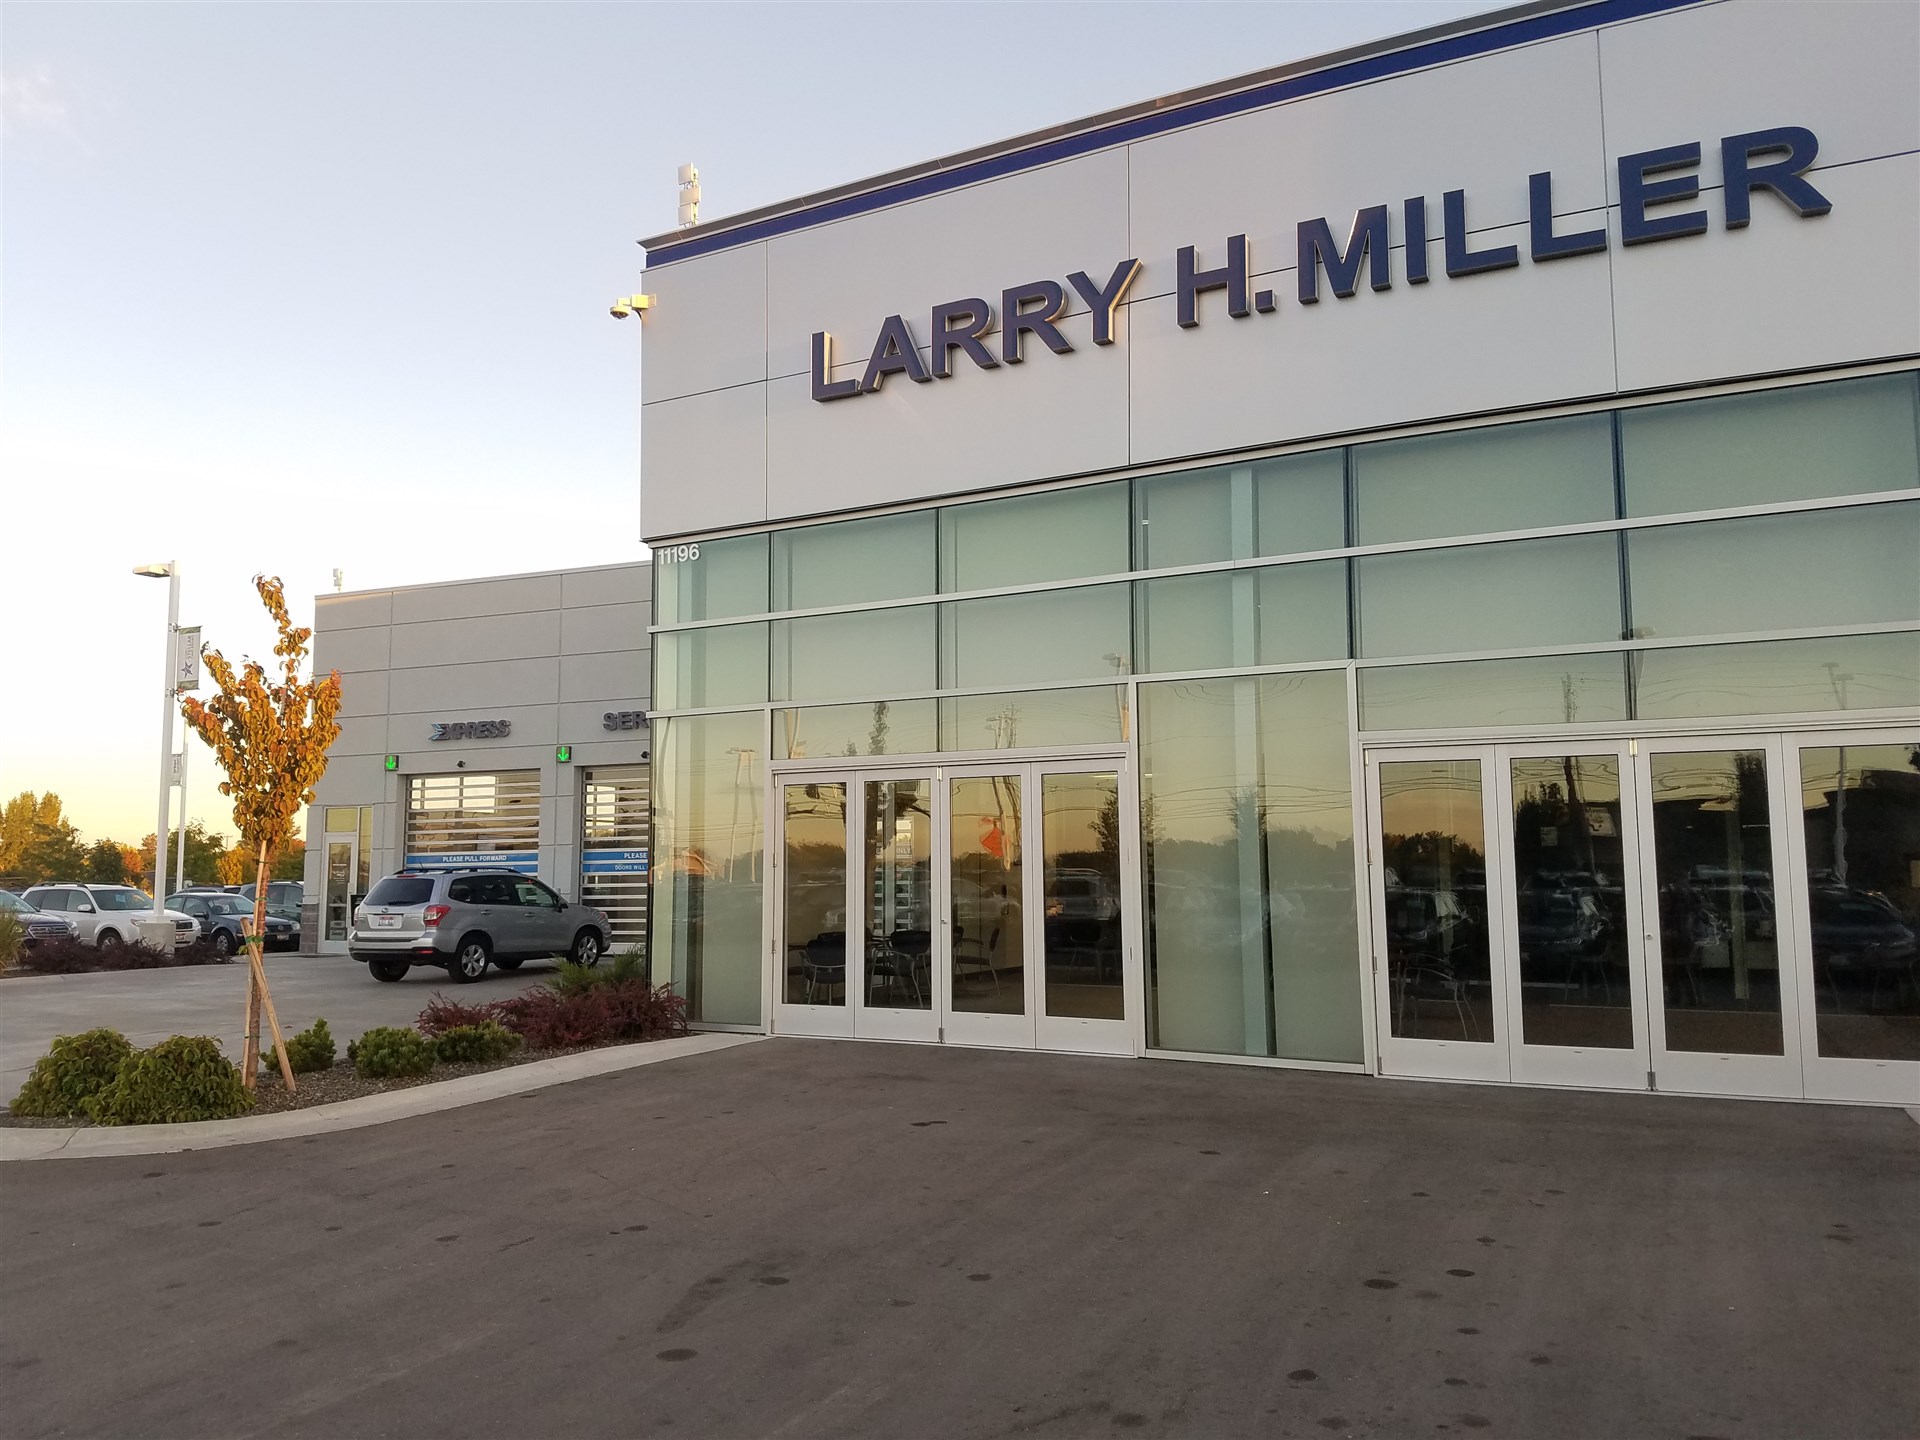 Larry H. Miller Subaru Boise